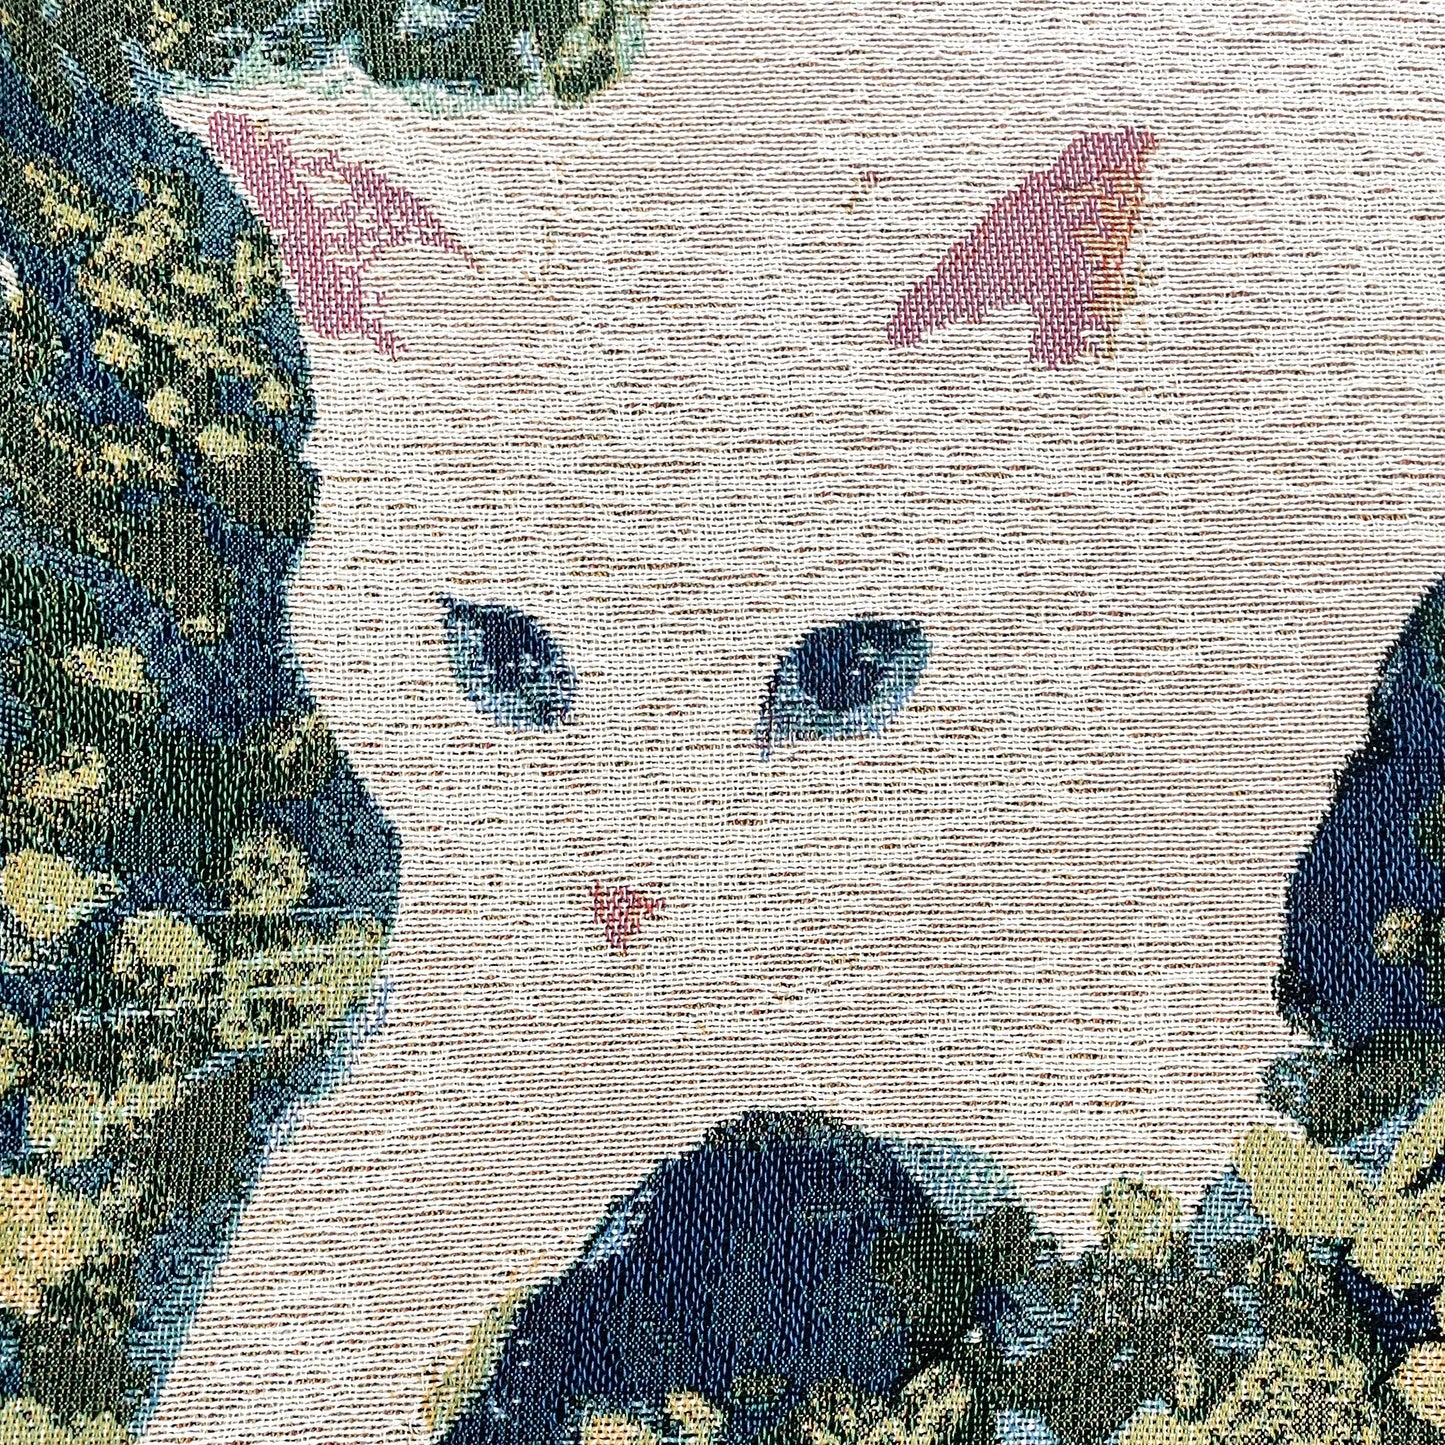 CLoseup of woven blanket cat